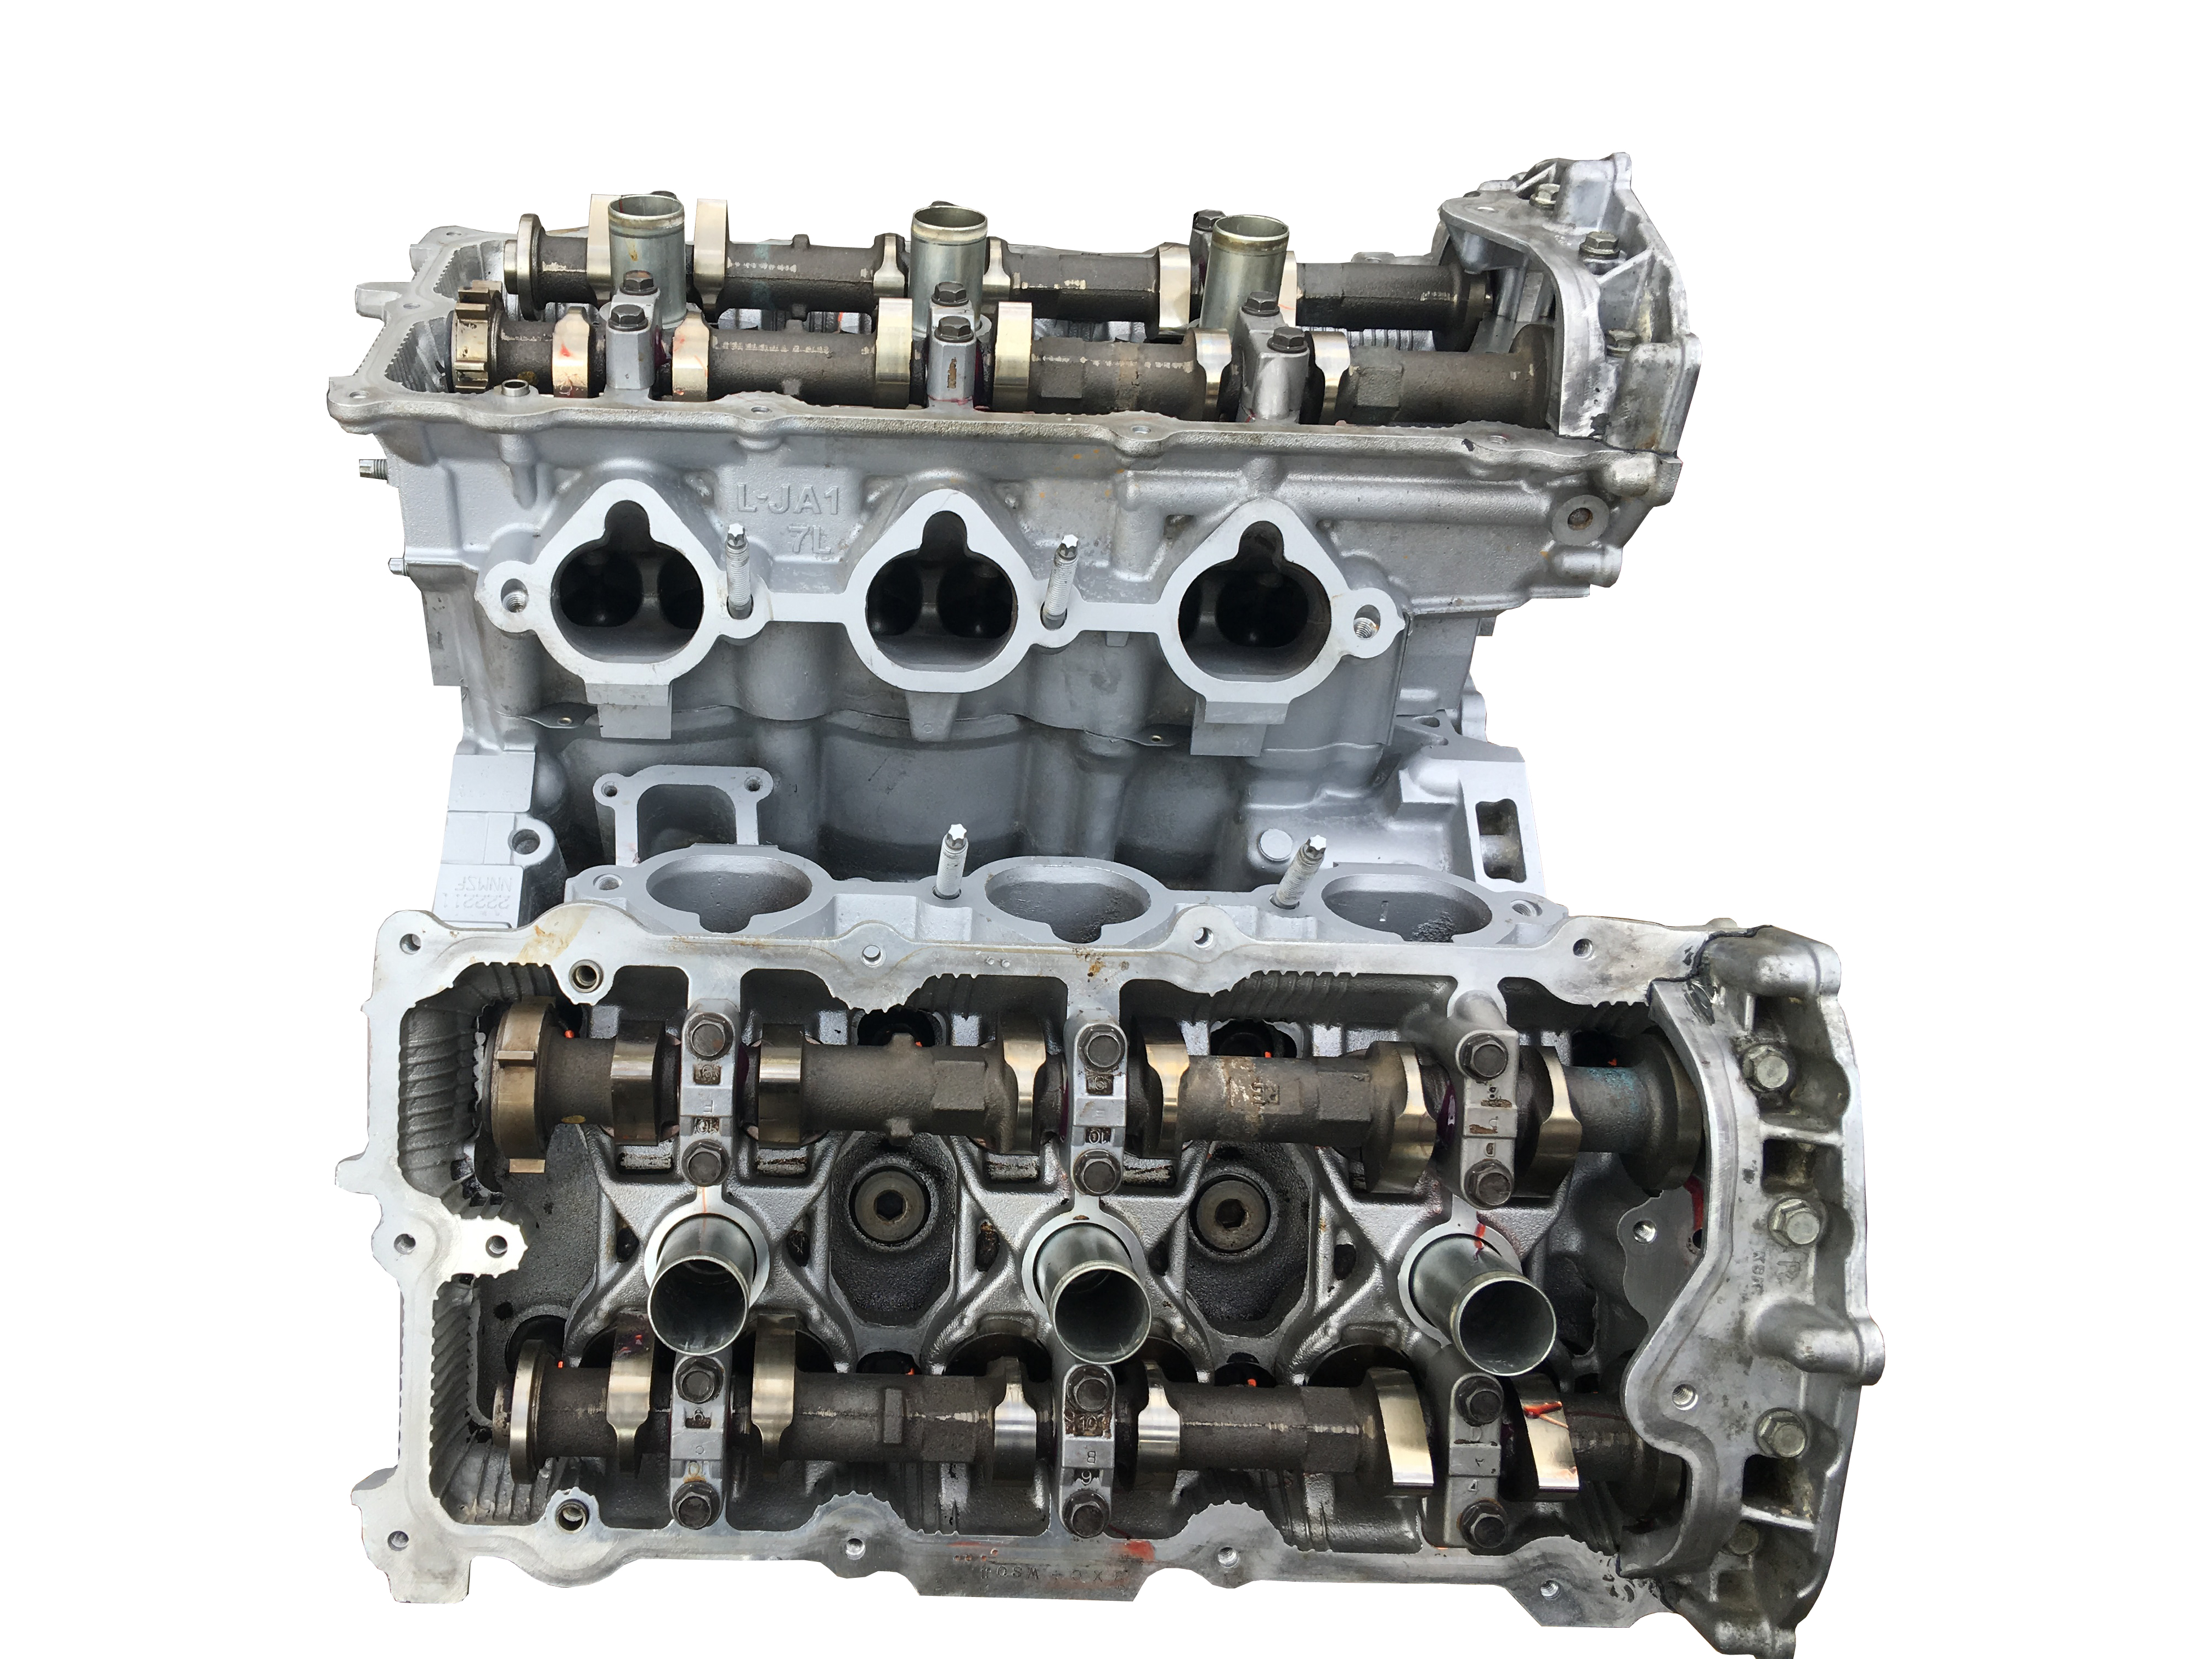 Infiniti VQ35DE rebuilt engine for Infiniti G35